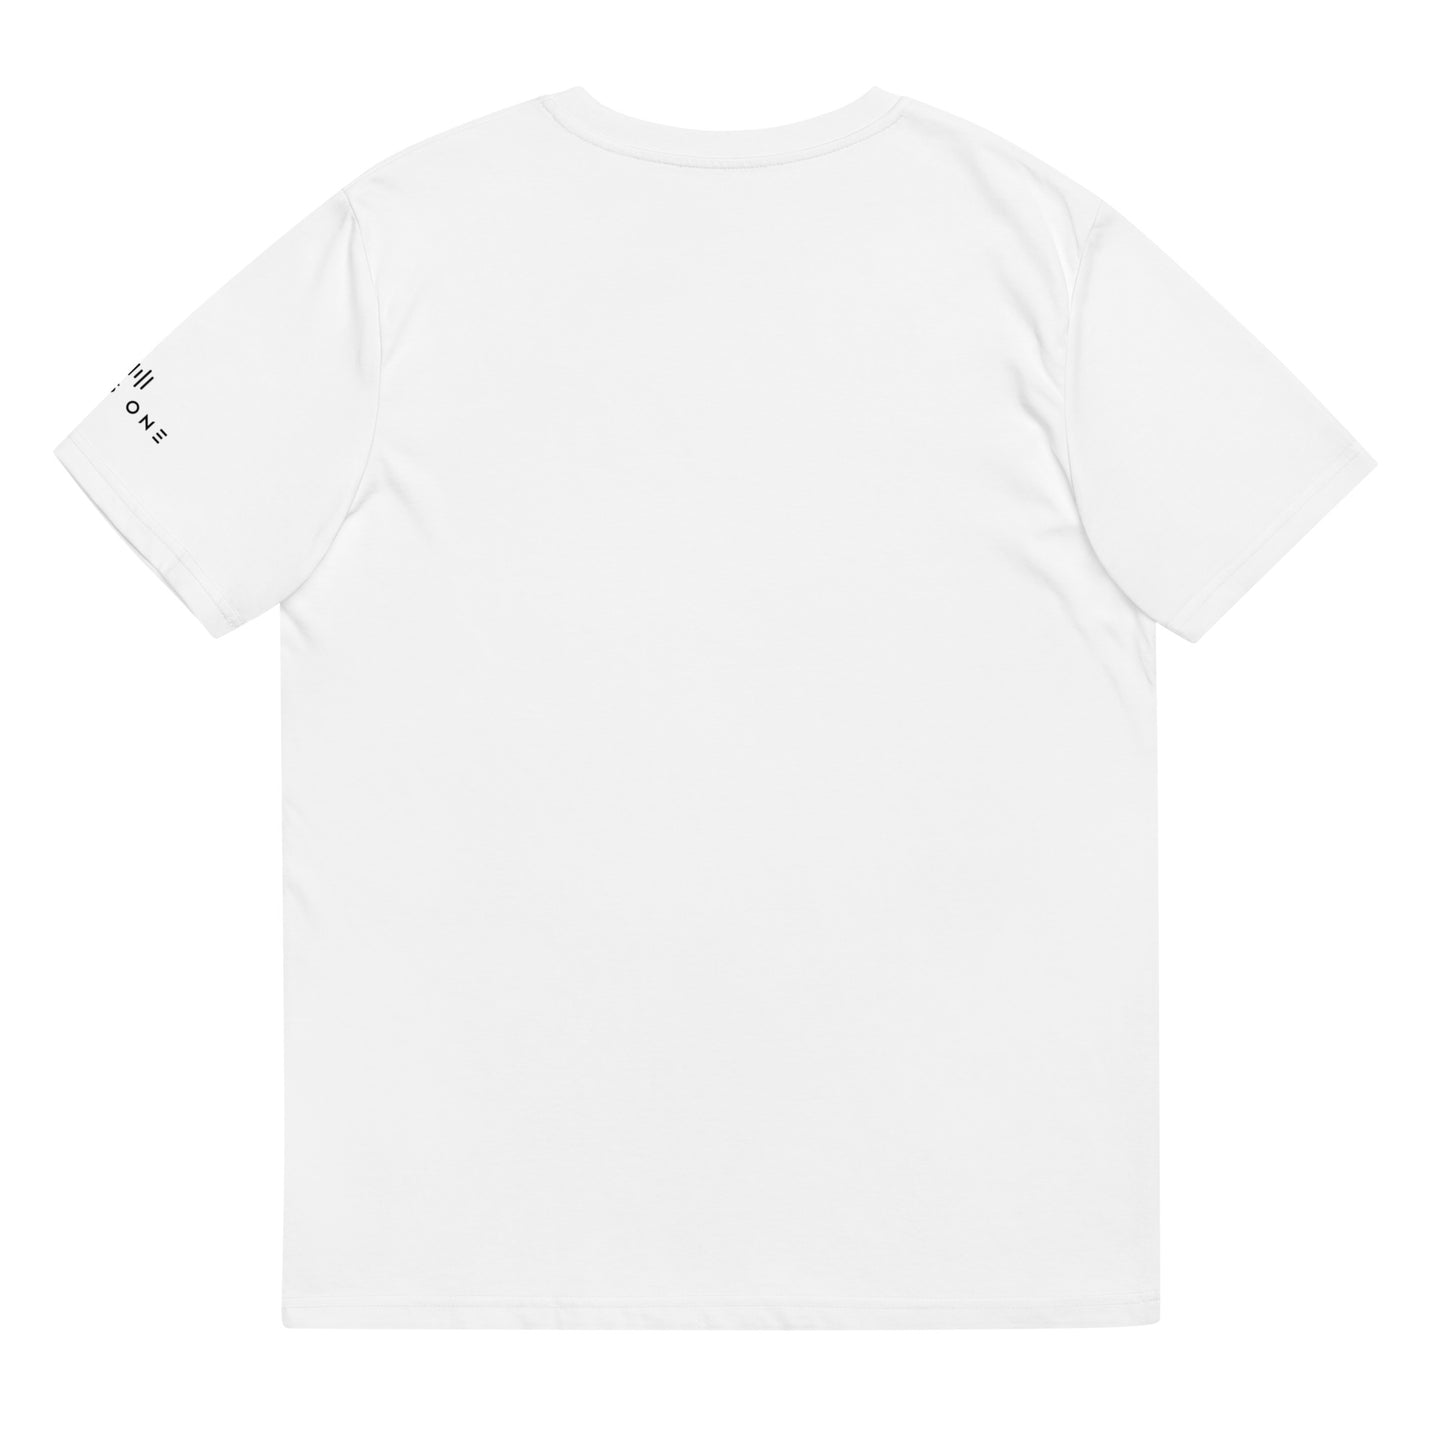 Ltd (Exist v1) Unisex organic cotton t-shirt (Black Text)